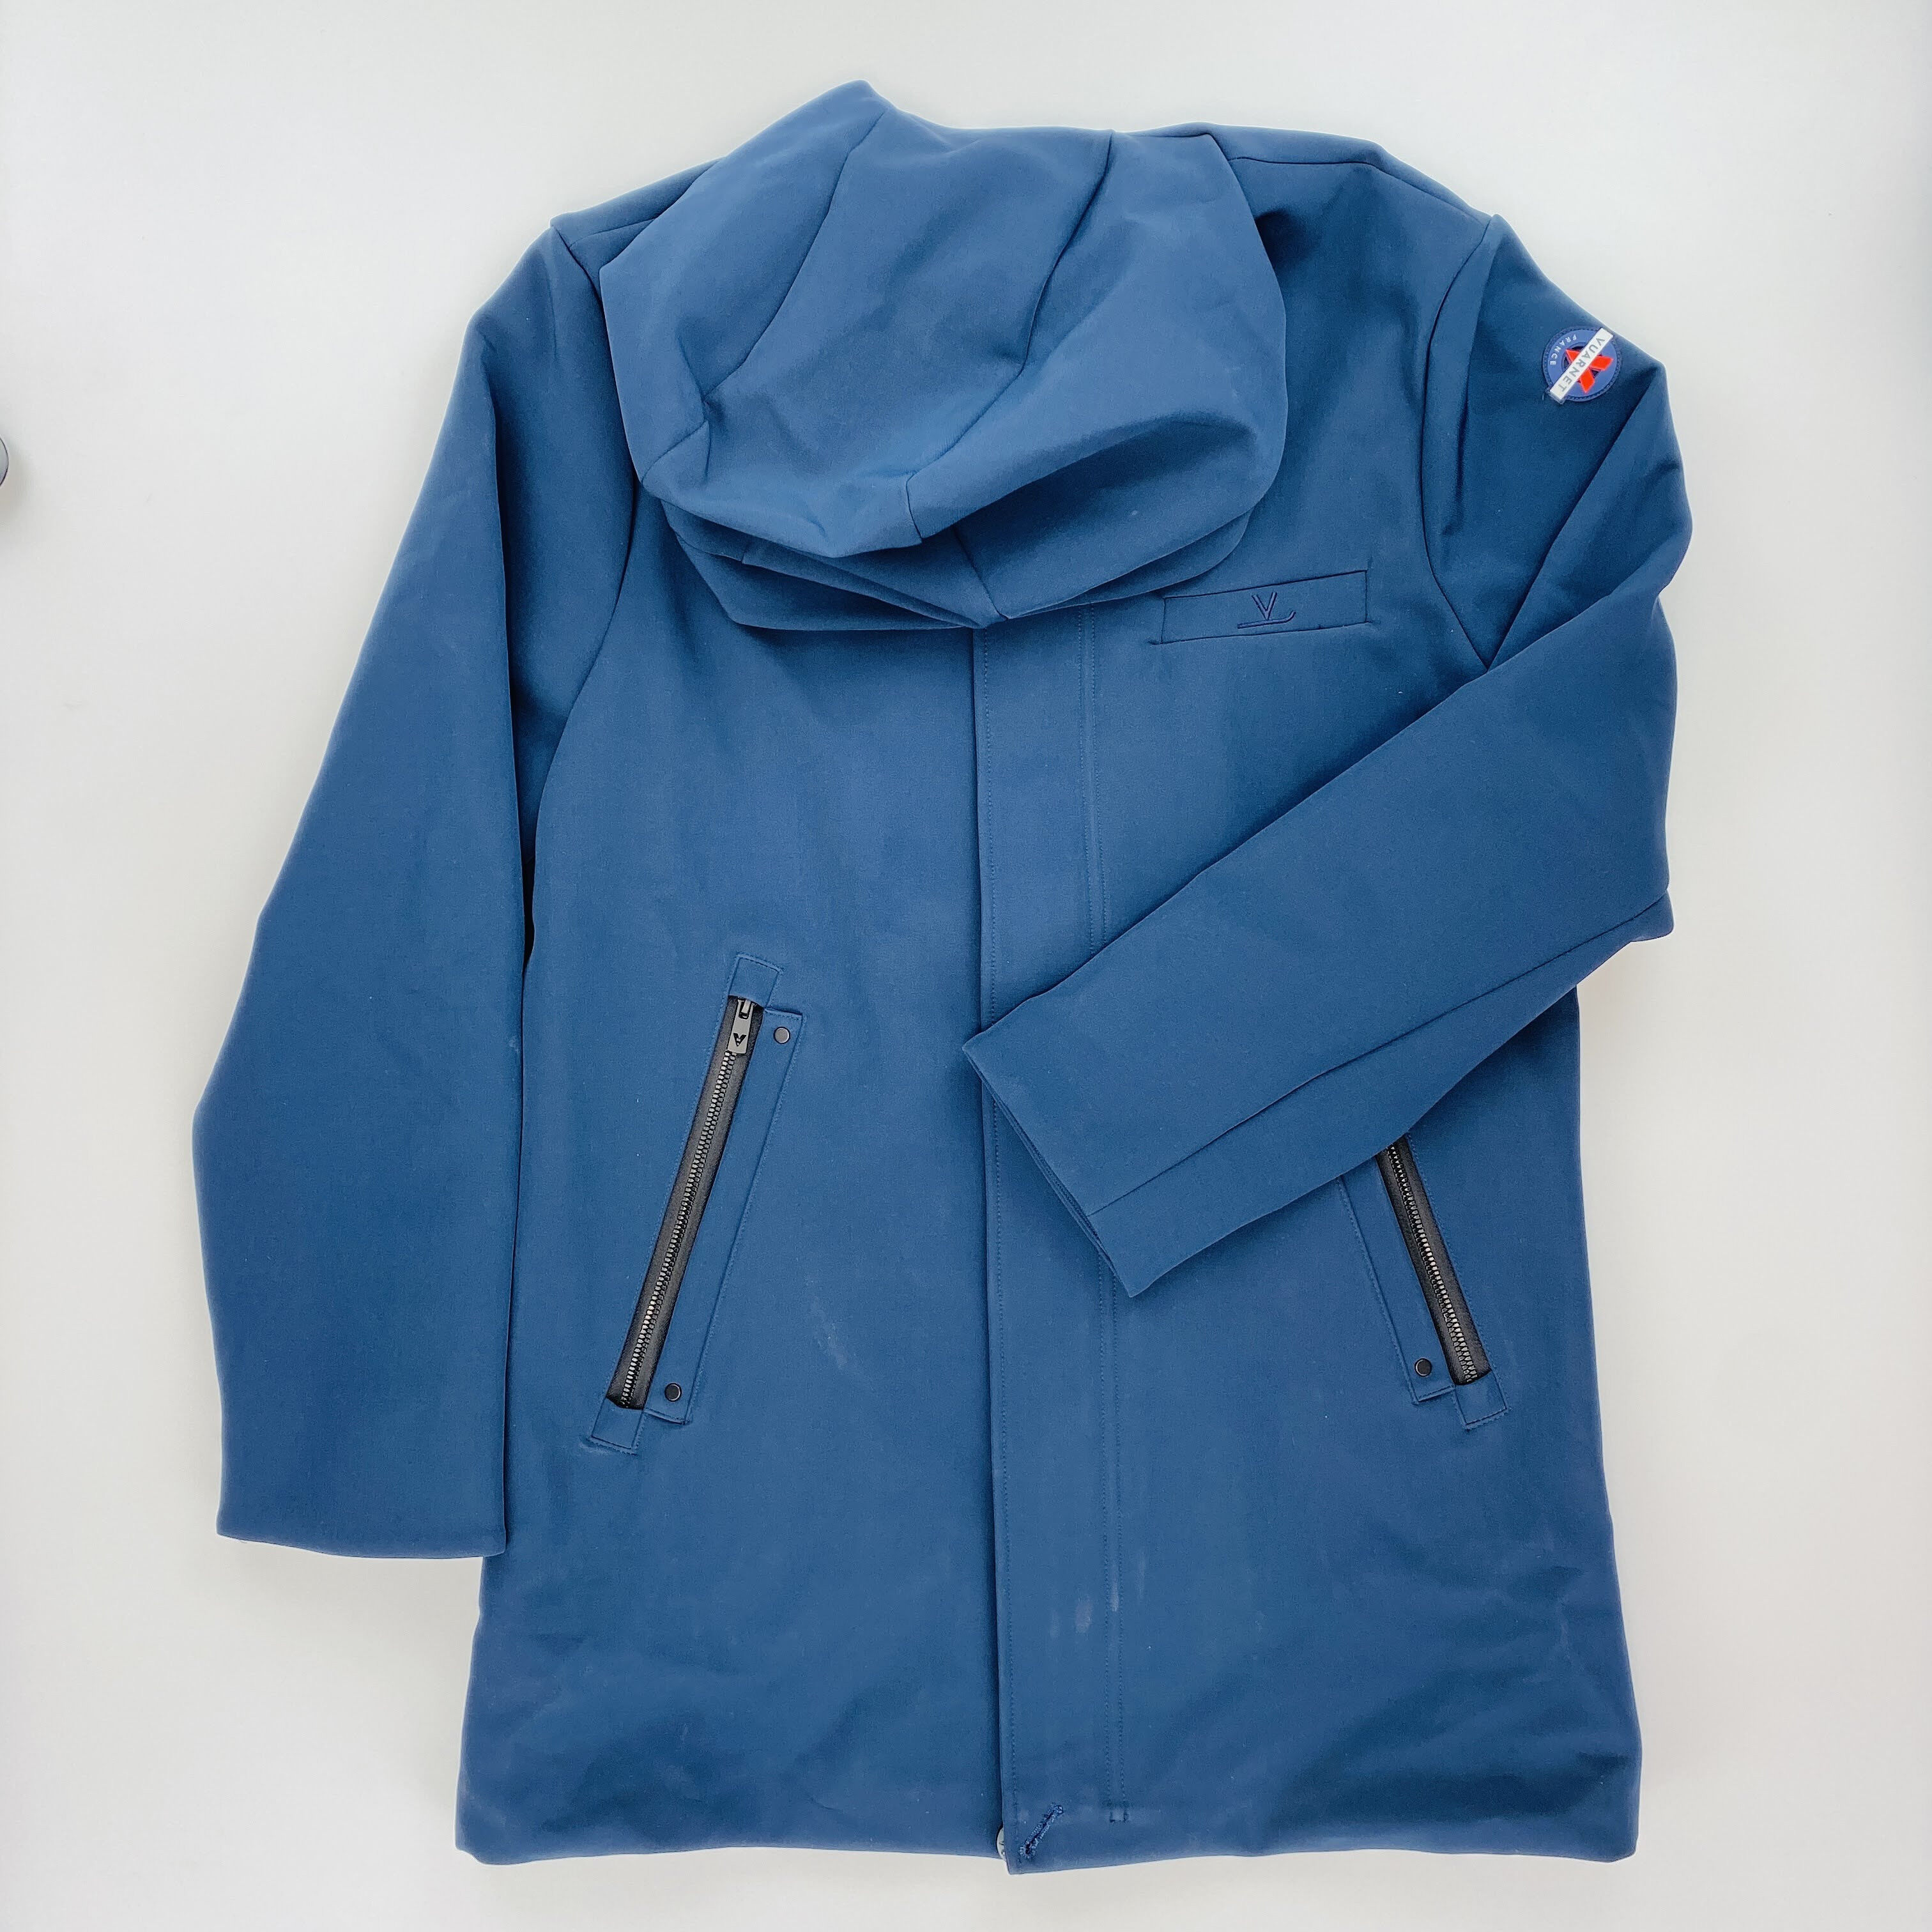 Vuarnet Kyoga Jacket - Segunda Mano Chaqueta - Hombre - Aceite azul - L | Hardloop